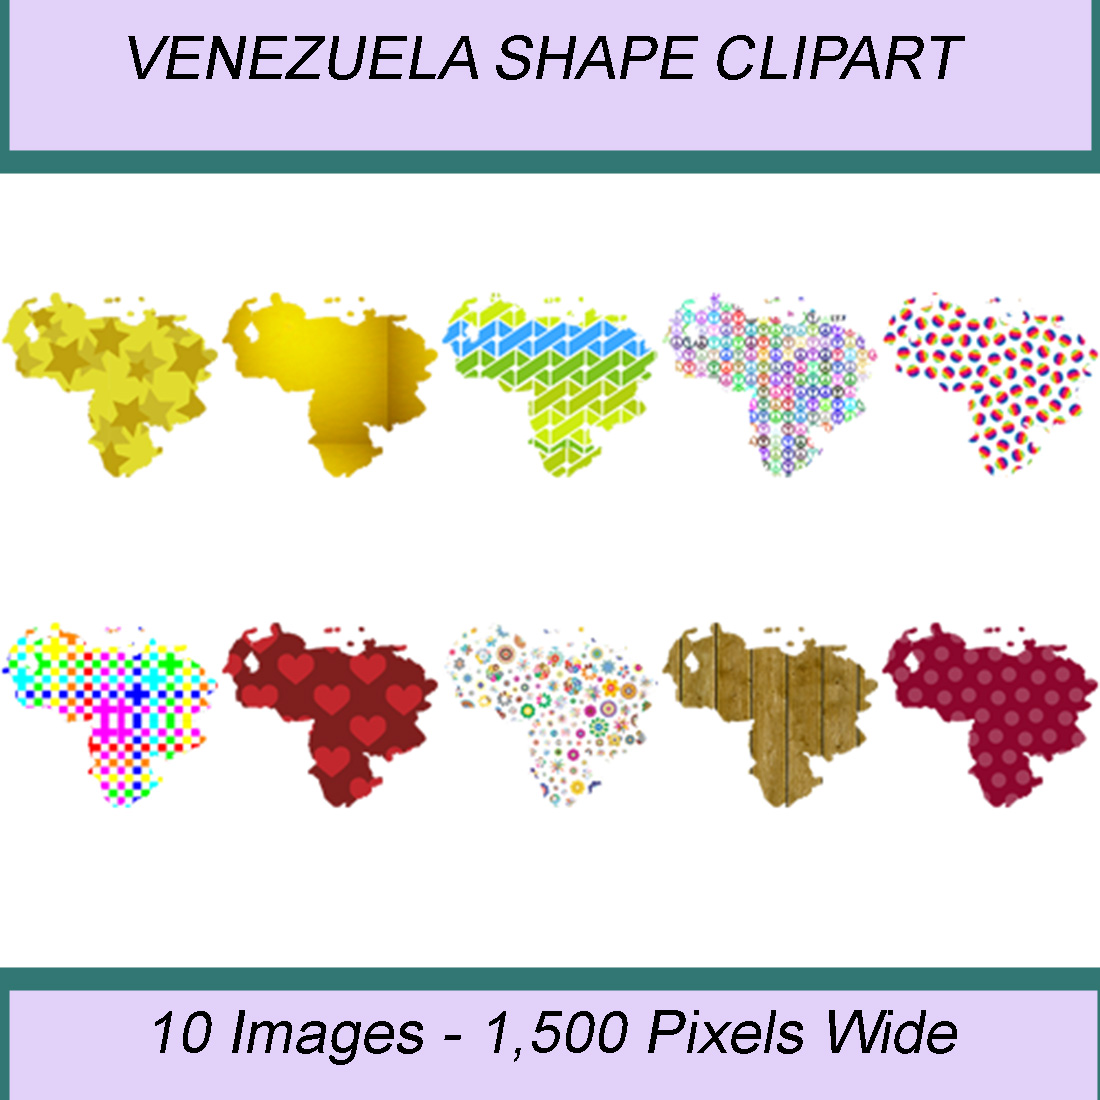 VENEZUELA SHAPE CLIPART ICONS cover image.